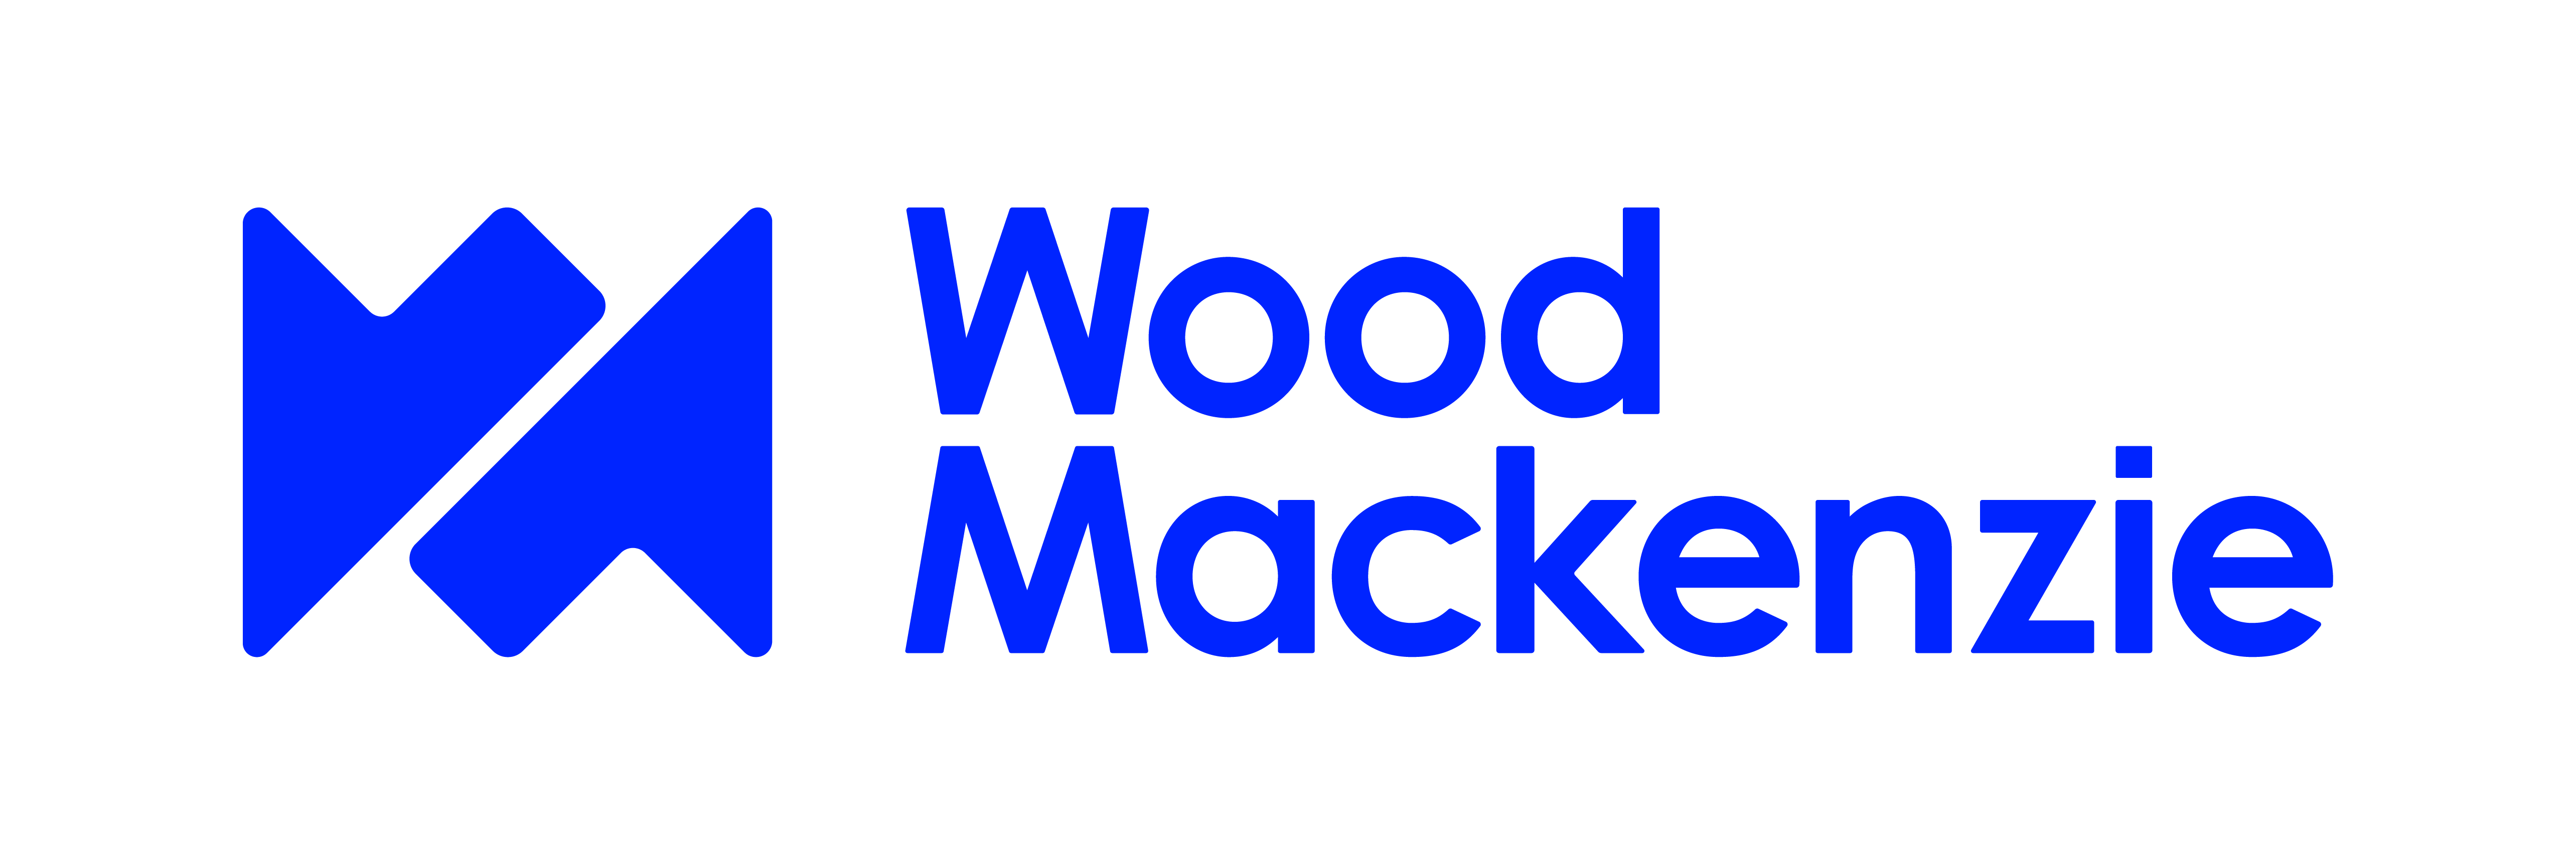 Wood Mackenzie logo